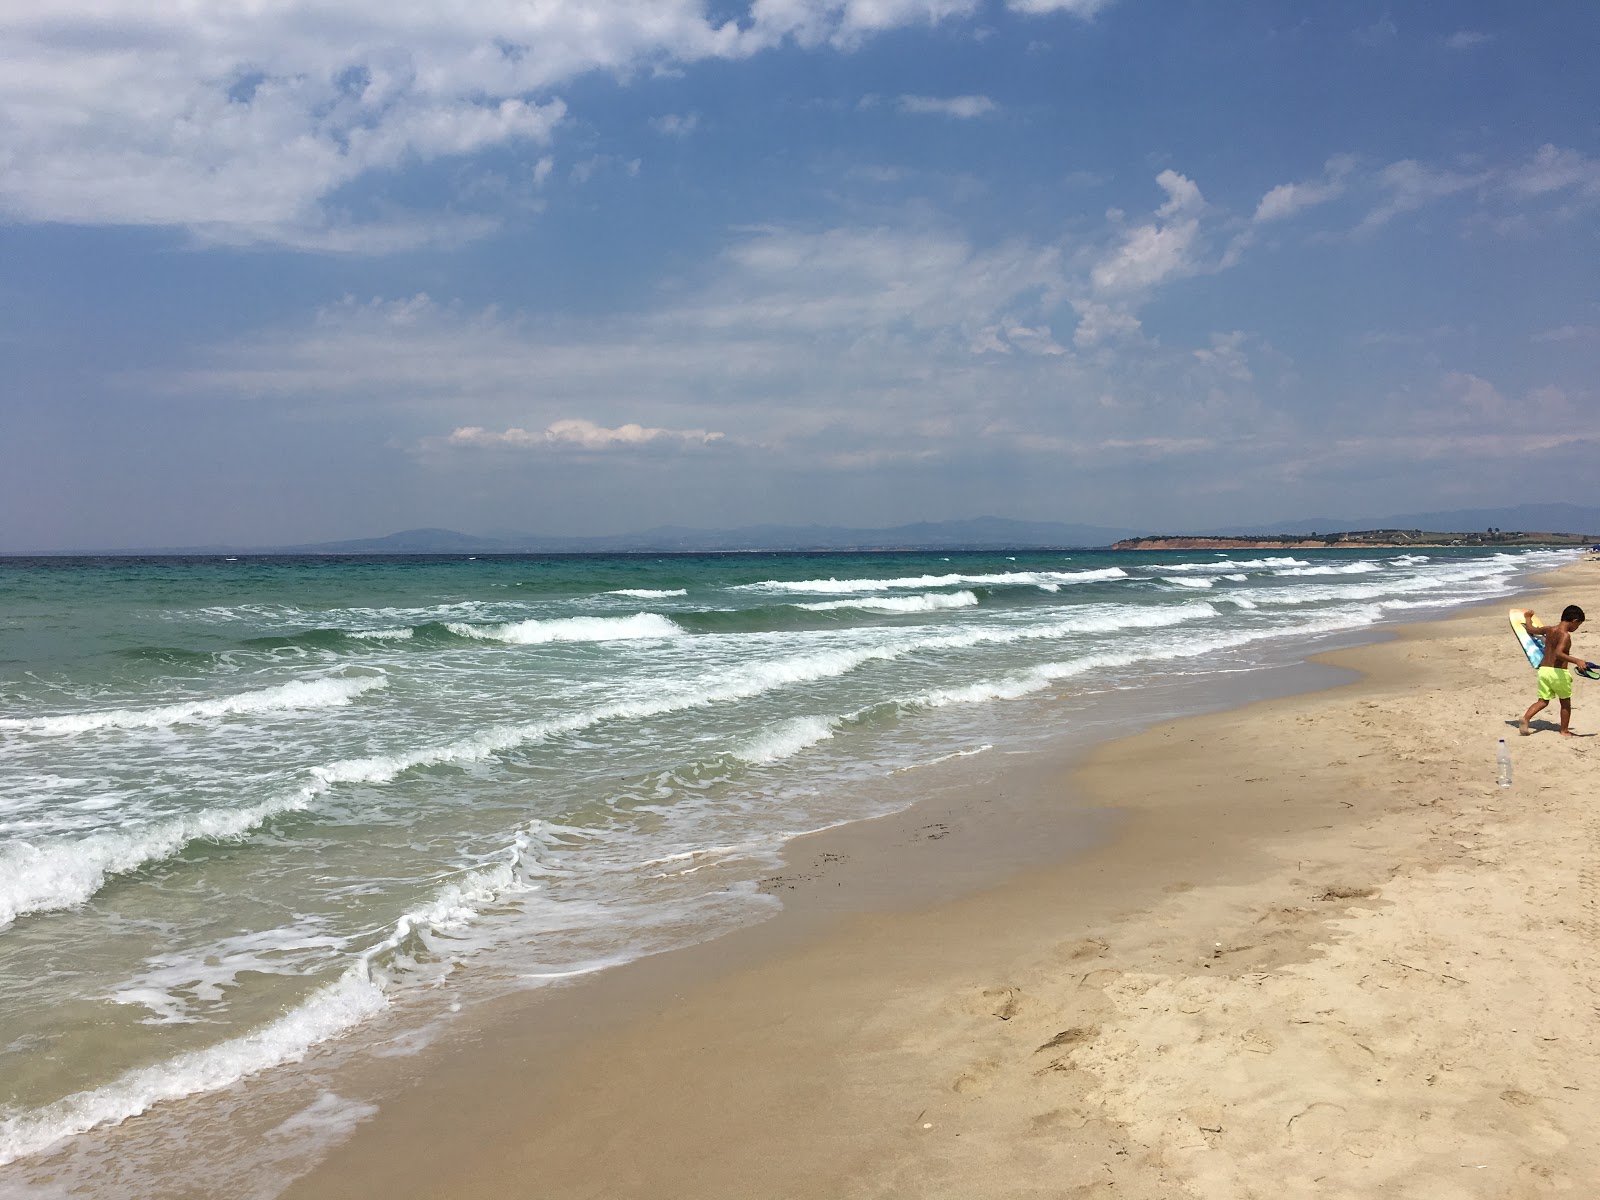 Fotografie cu Stavronikita beach și peisajul său frumos